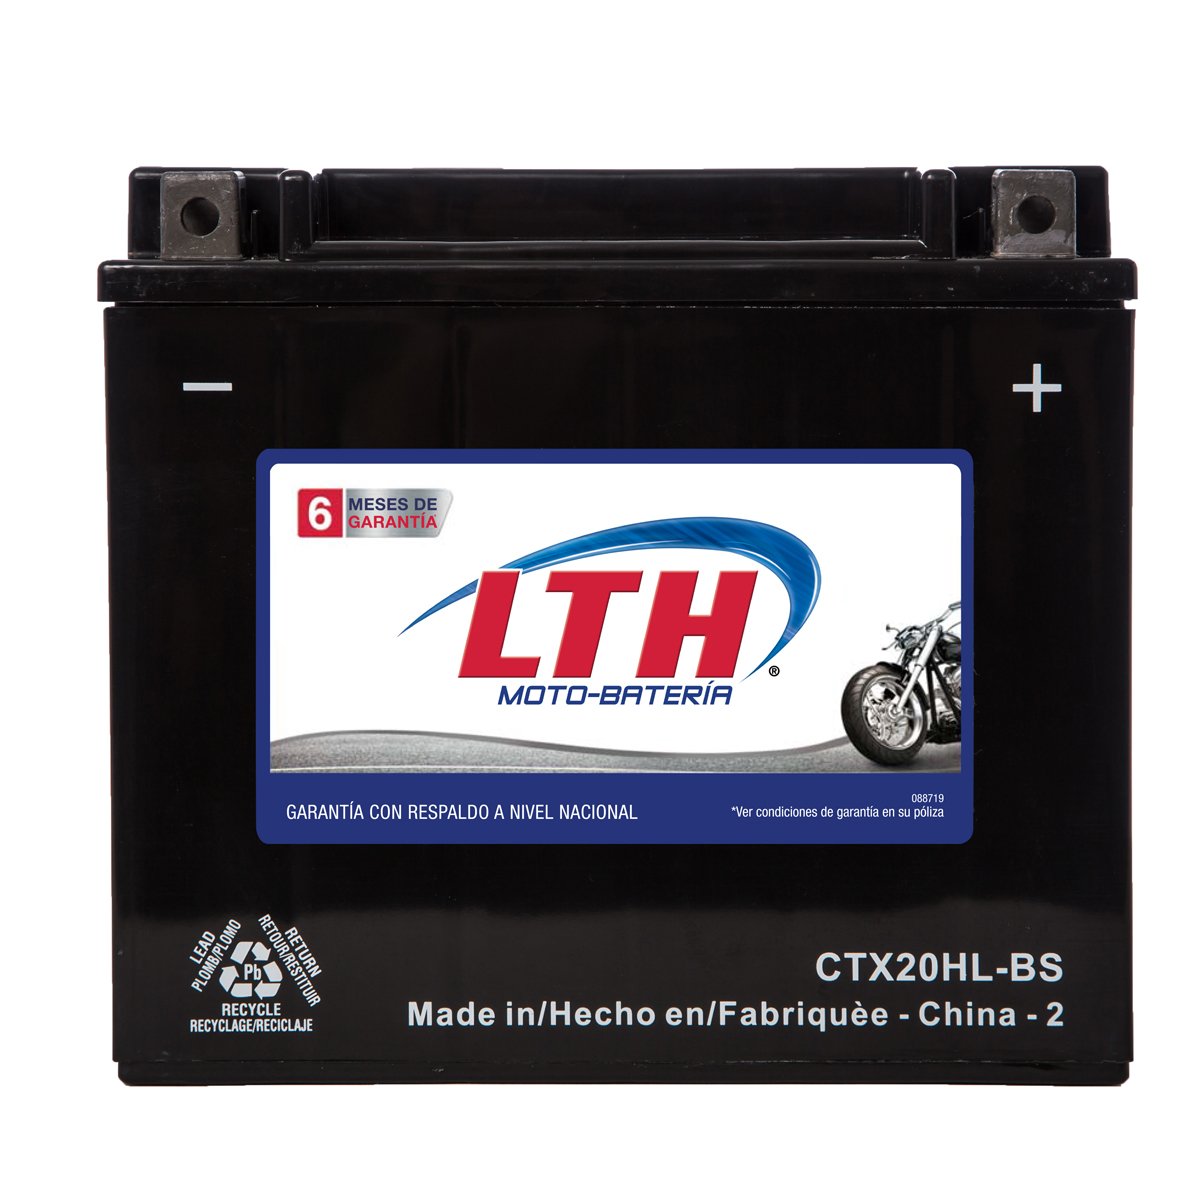 Moto Bater&iacute;a Lth Ctx20Hl Bs